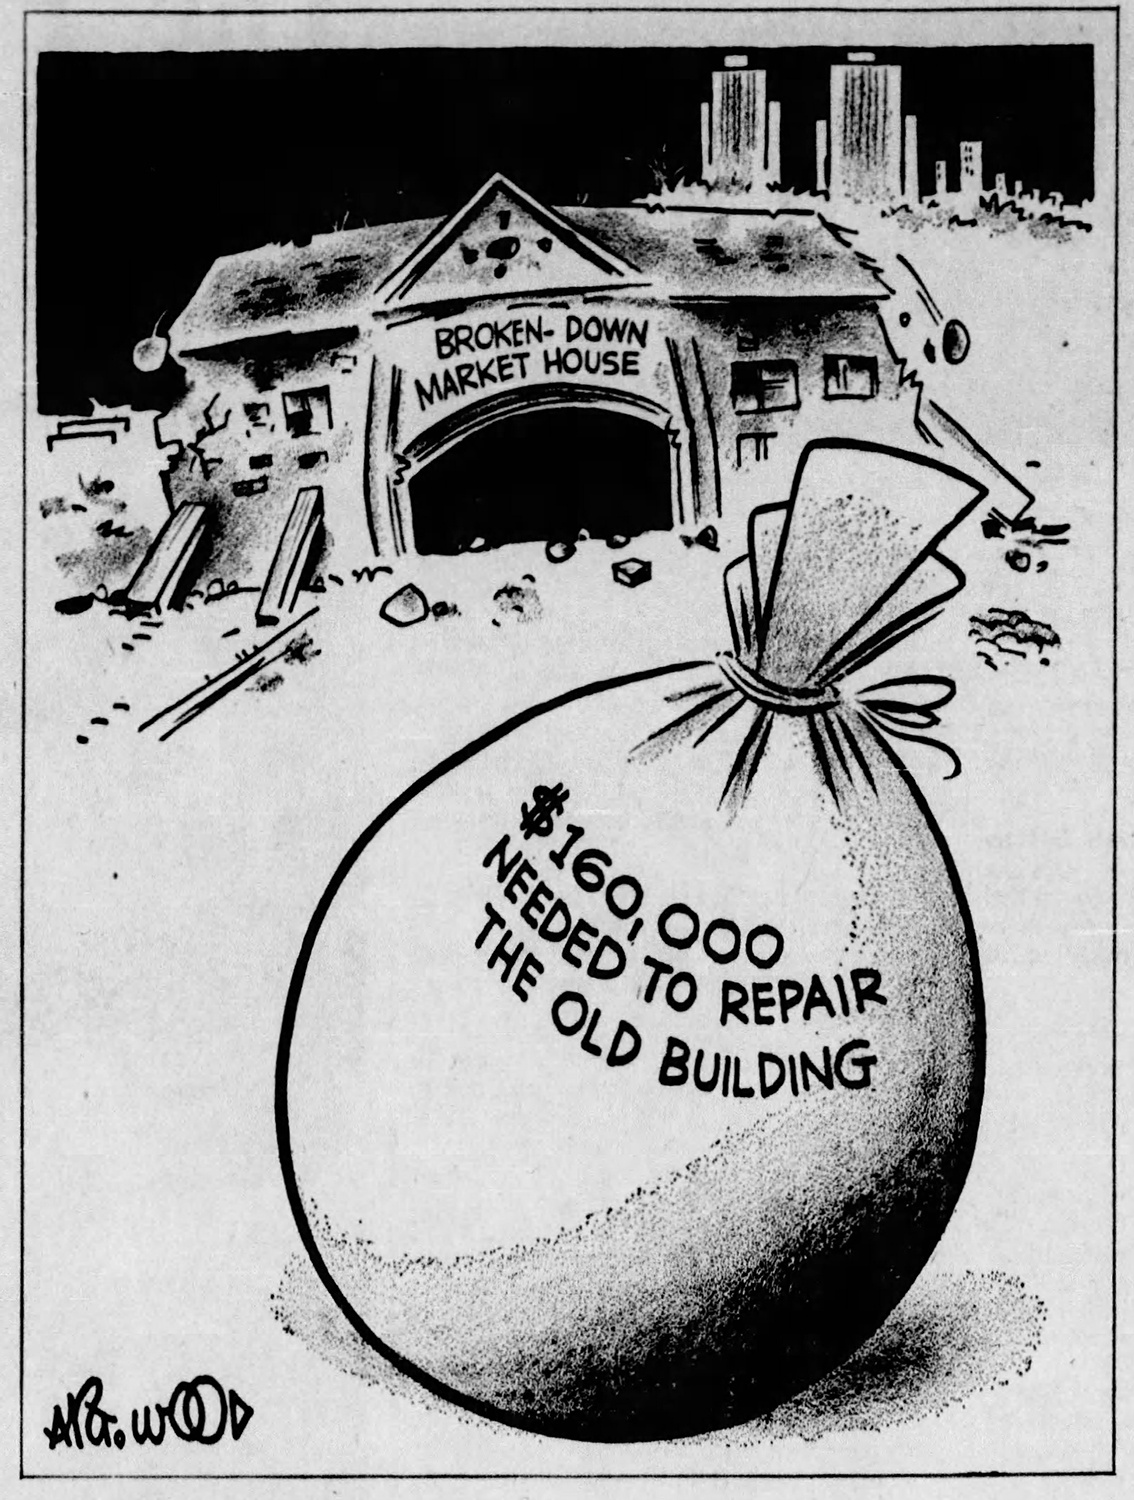 Editorial cartoon about Diamond Market House repair costs, 1960.